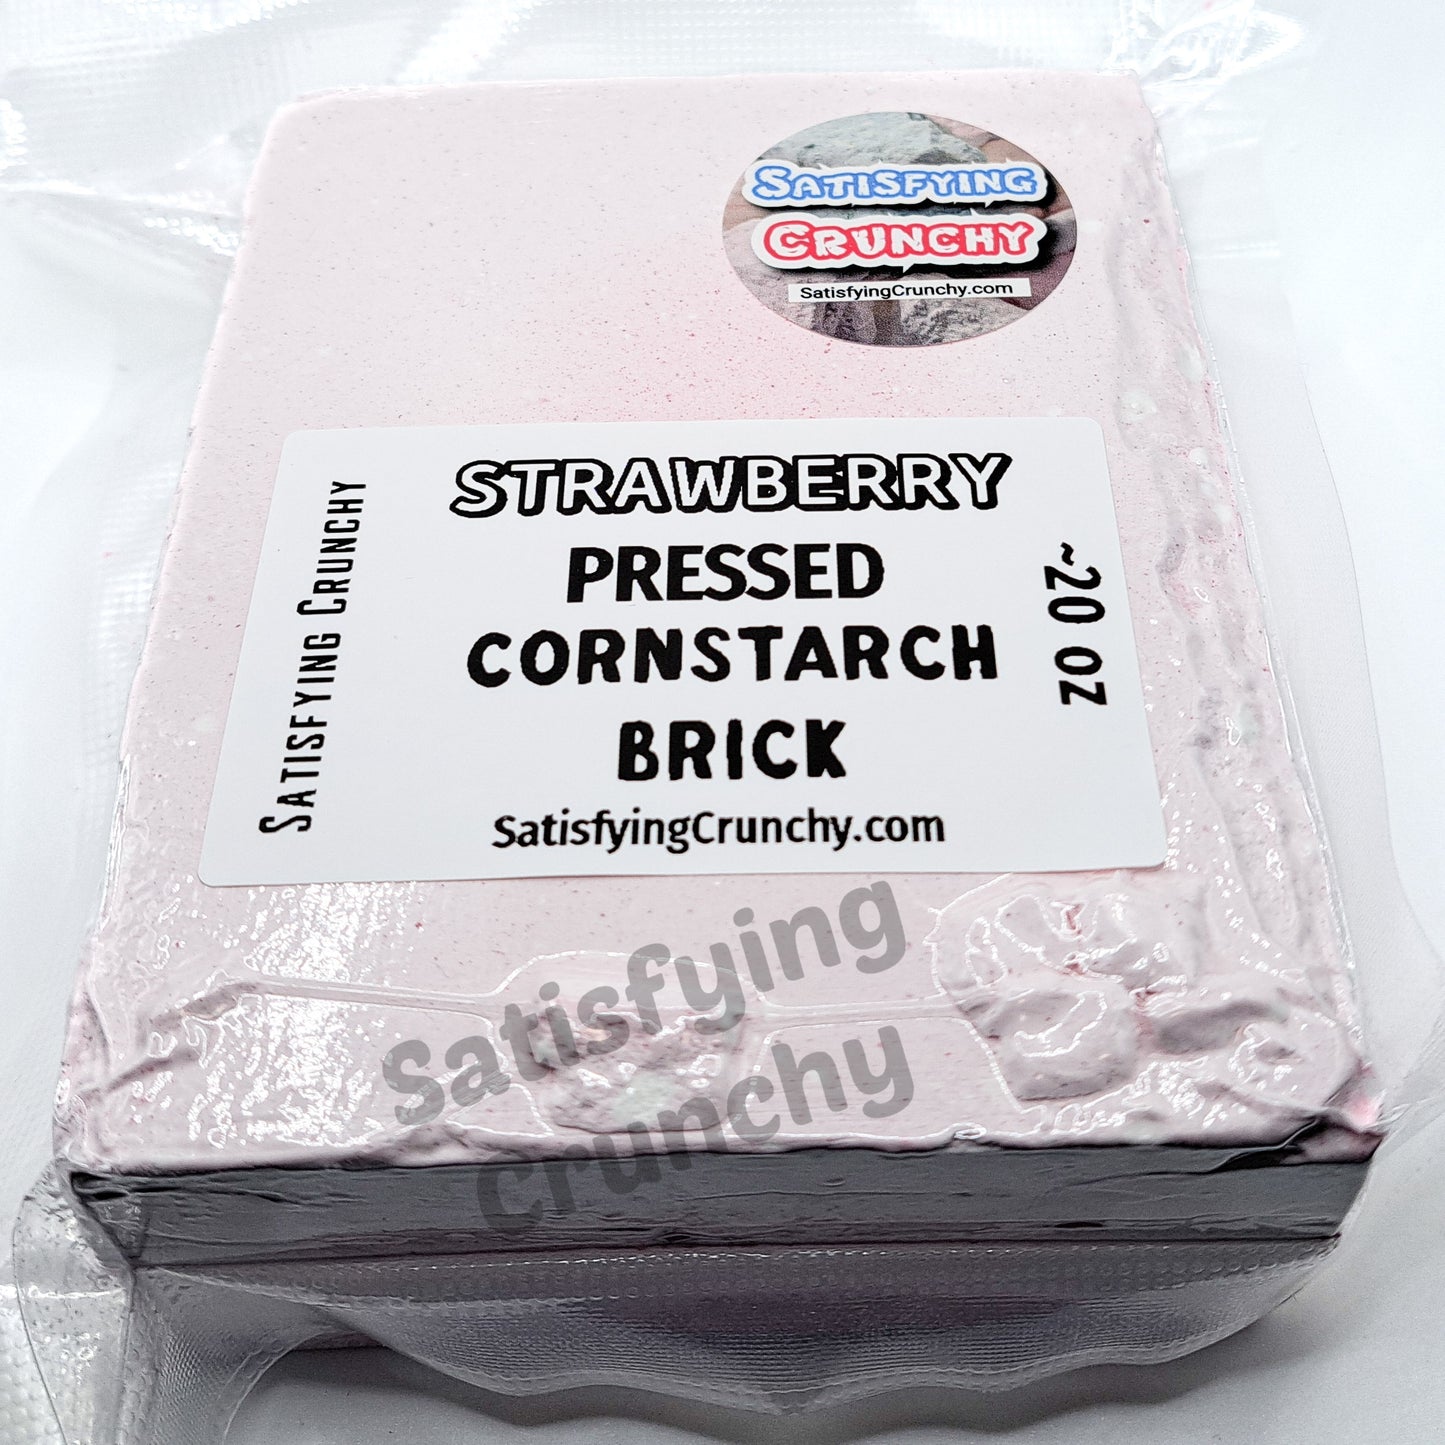 Strawberry Flavored PRESSED Cornstarch Brick